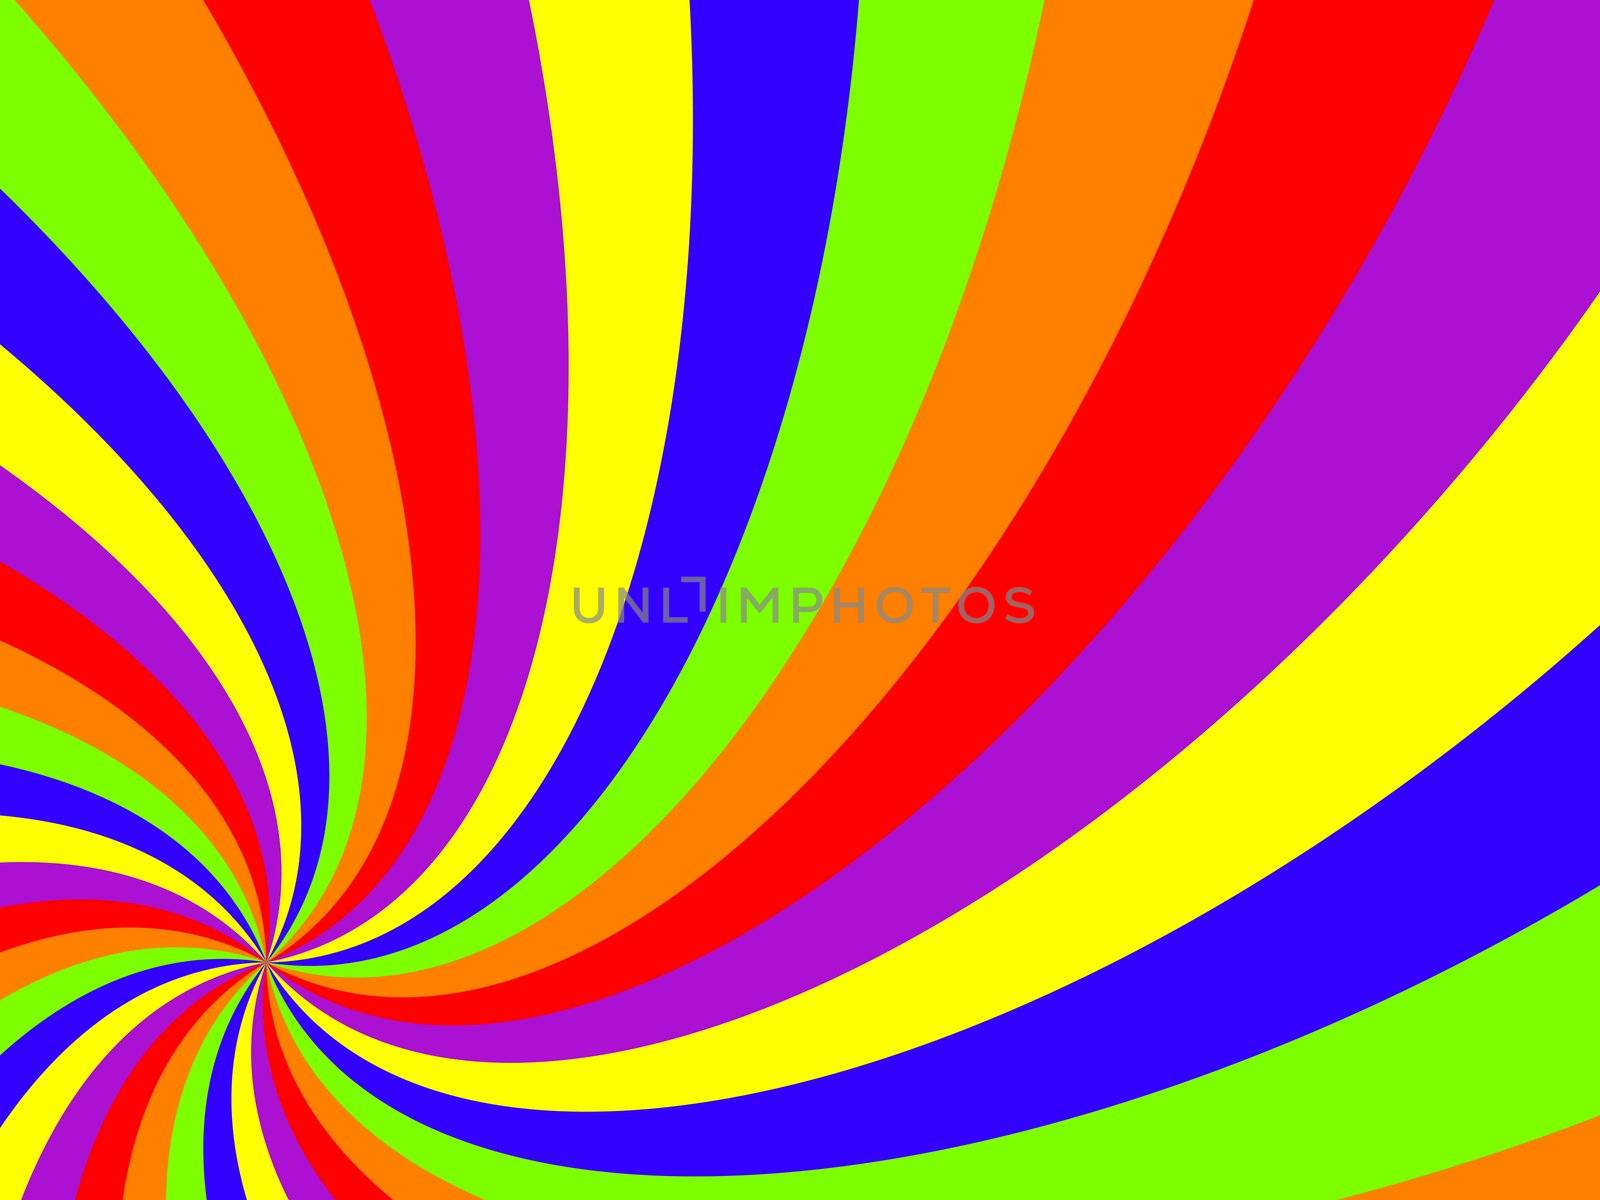 wavy swirl background, abstract vector art illustration